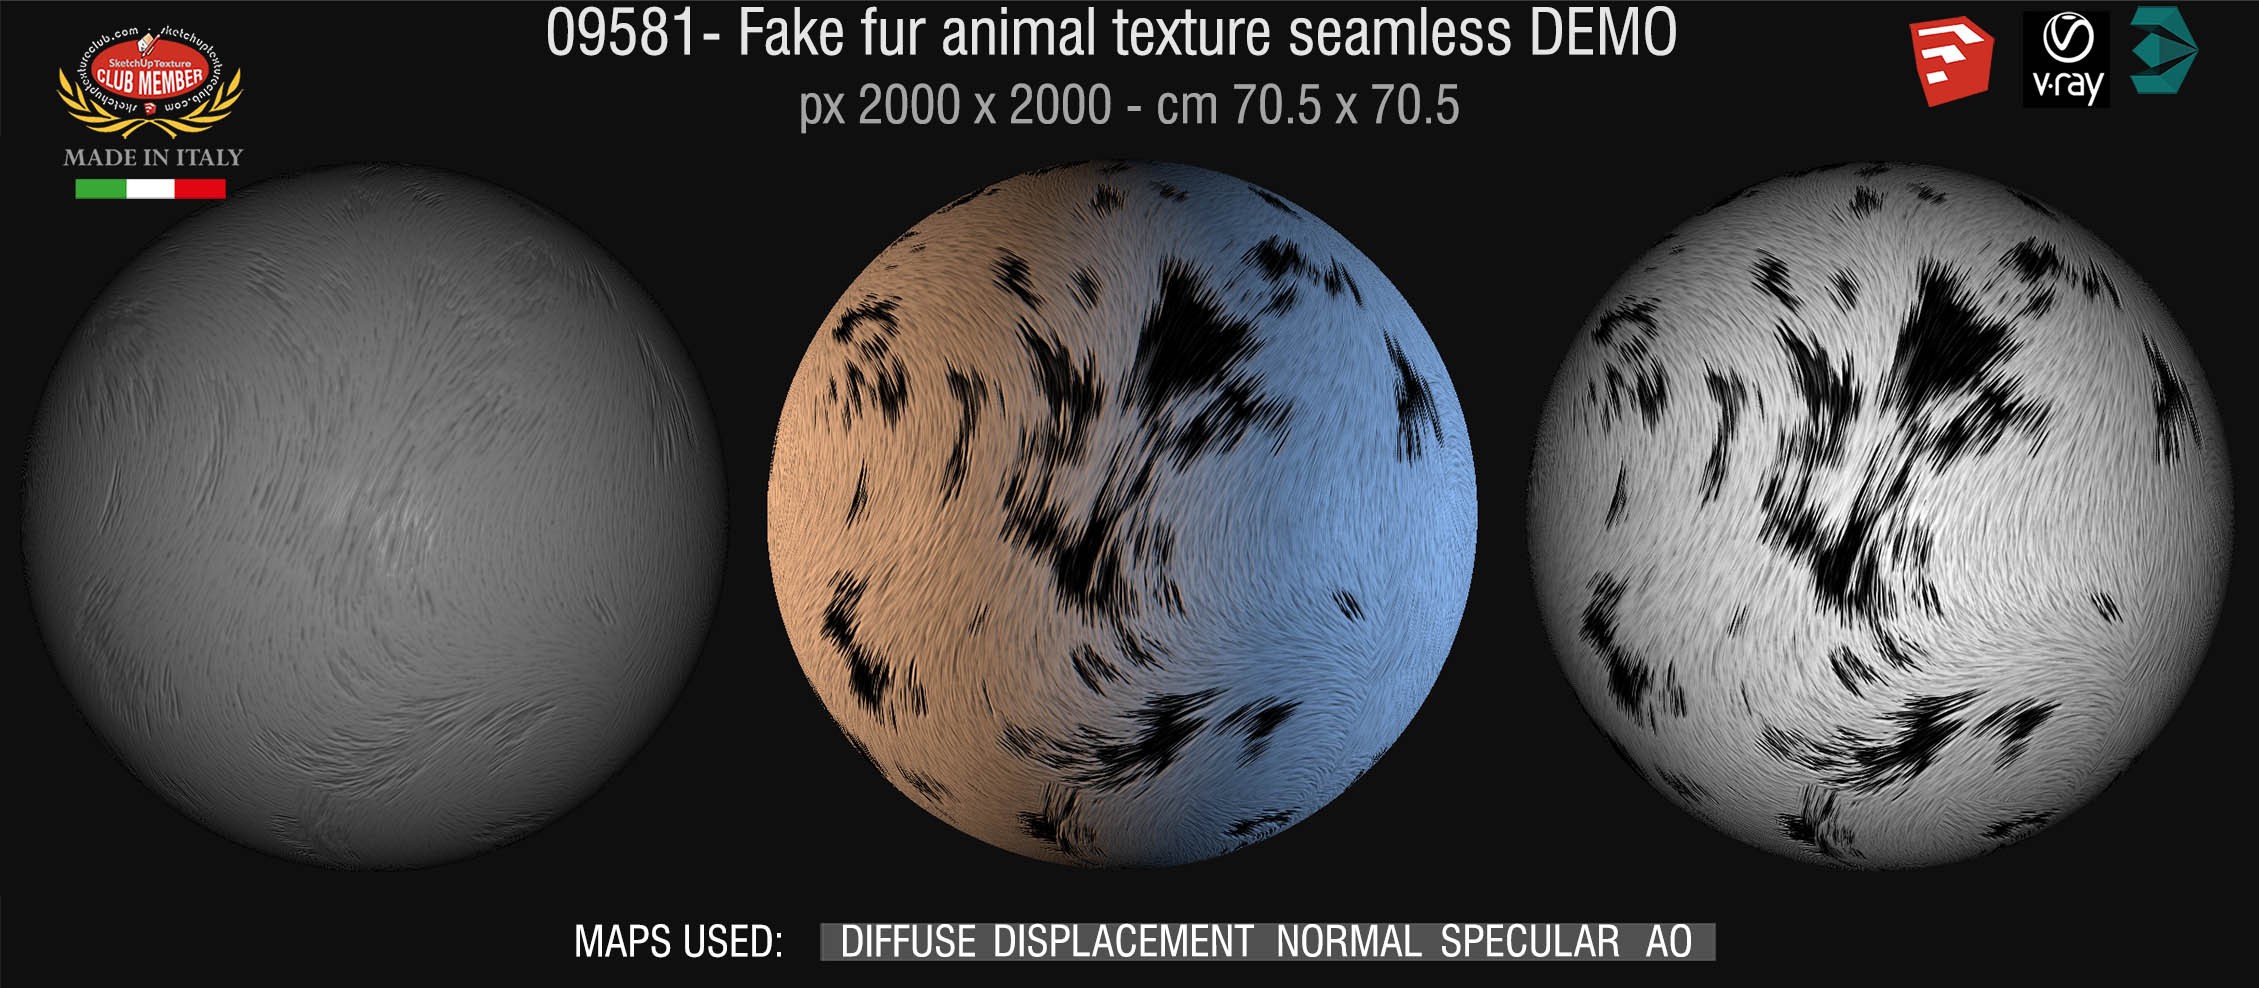 09581 HR fake fur animal texture seamless + maps DEMO